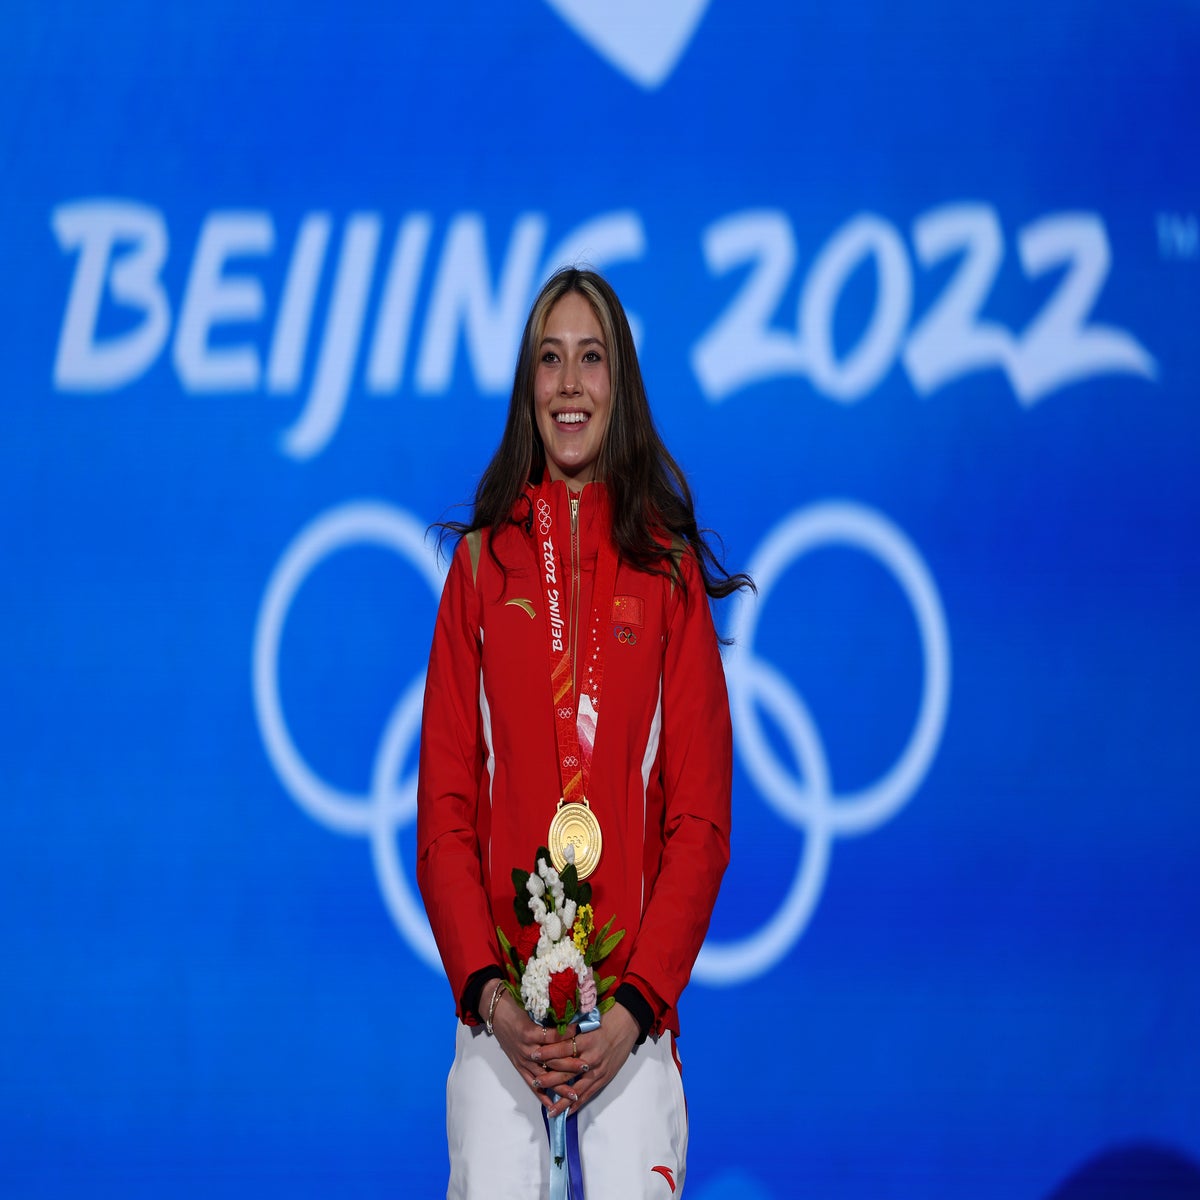 Eileen Gu: Chinese gold medalist 'breaking boundaries' but contradictions  heighten tensions